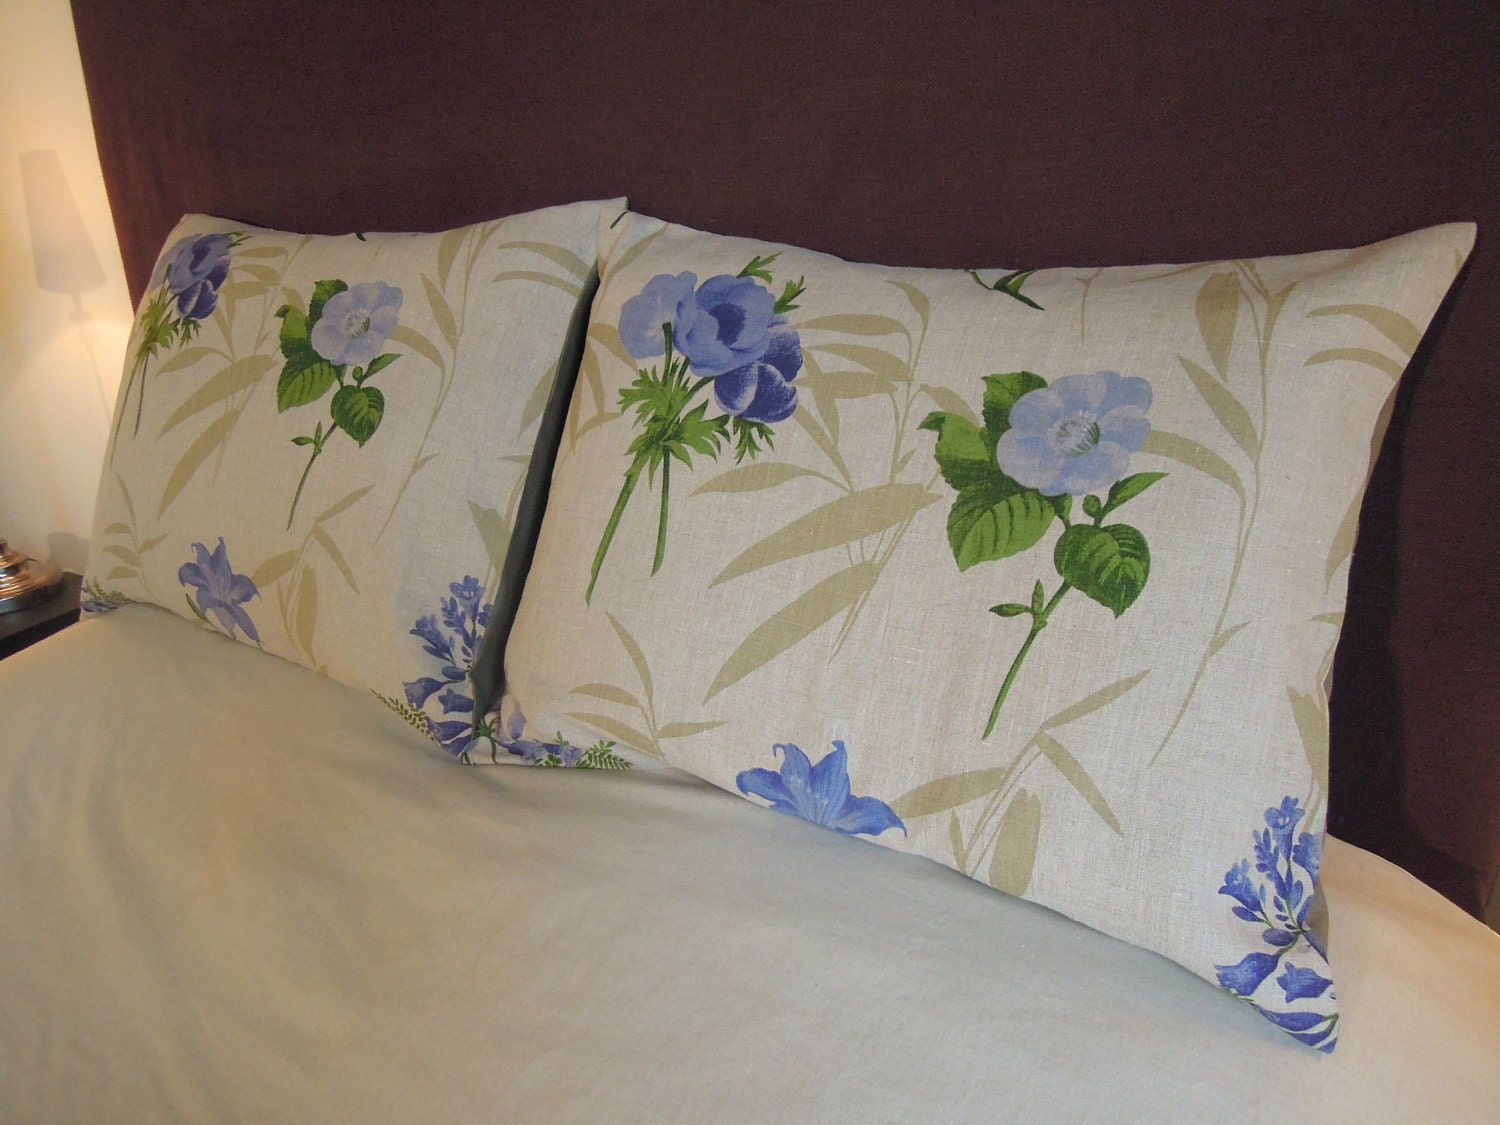 Bel Cuscino - Italian Floral Print Pillow, Bedding, Natural